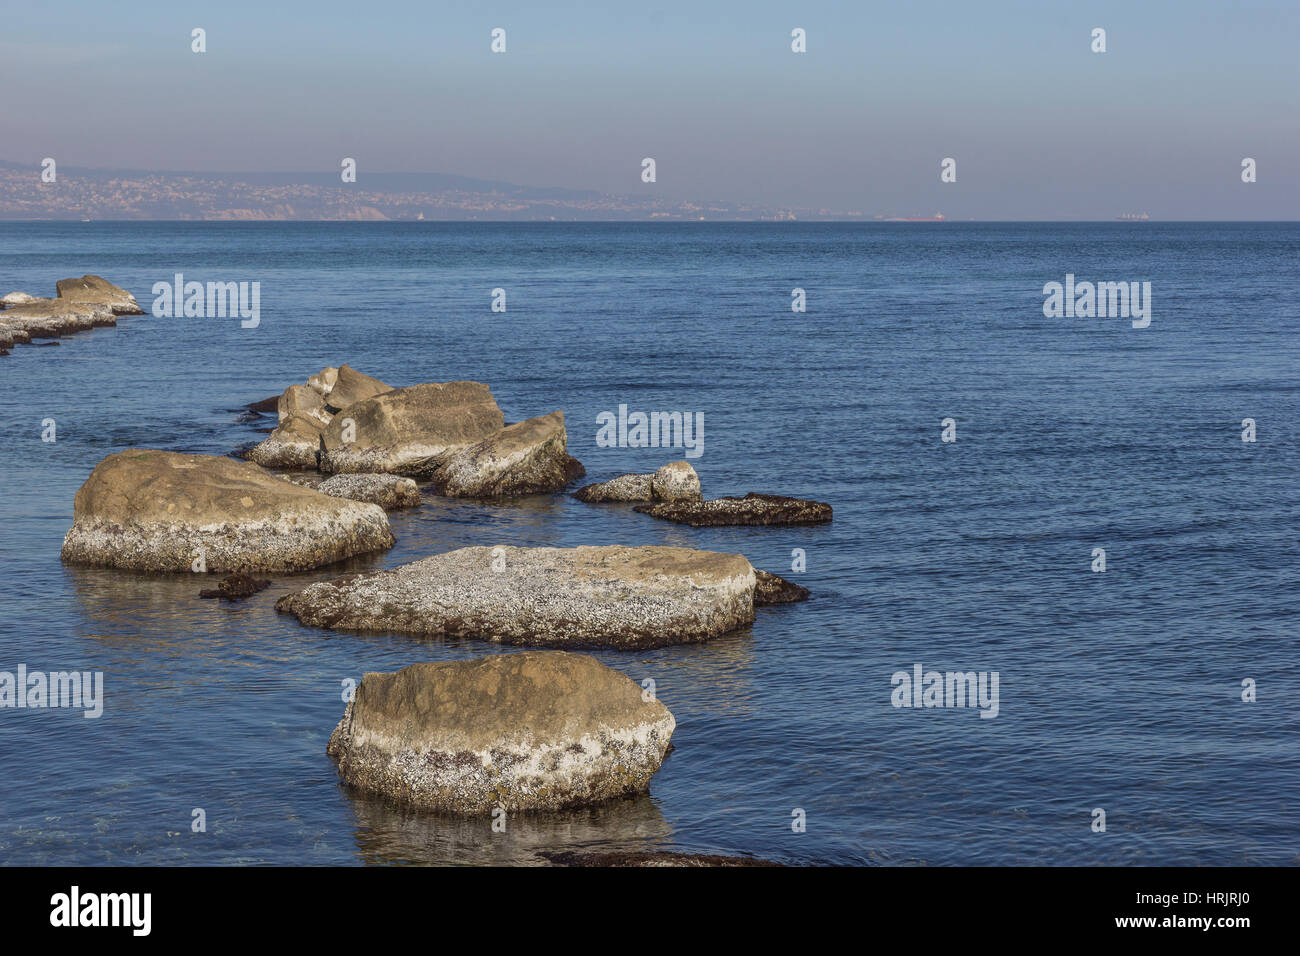 Beauty day view of sea rocks with algae Stock Photo